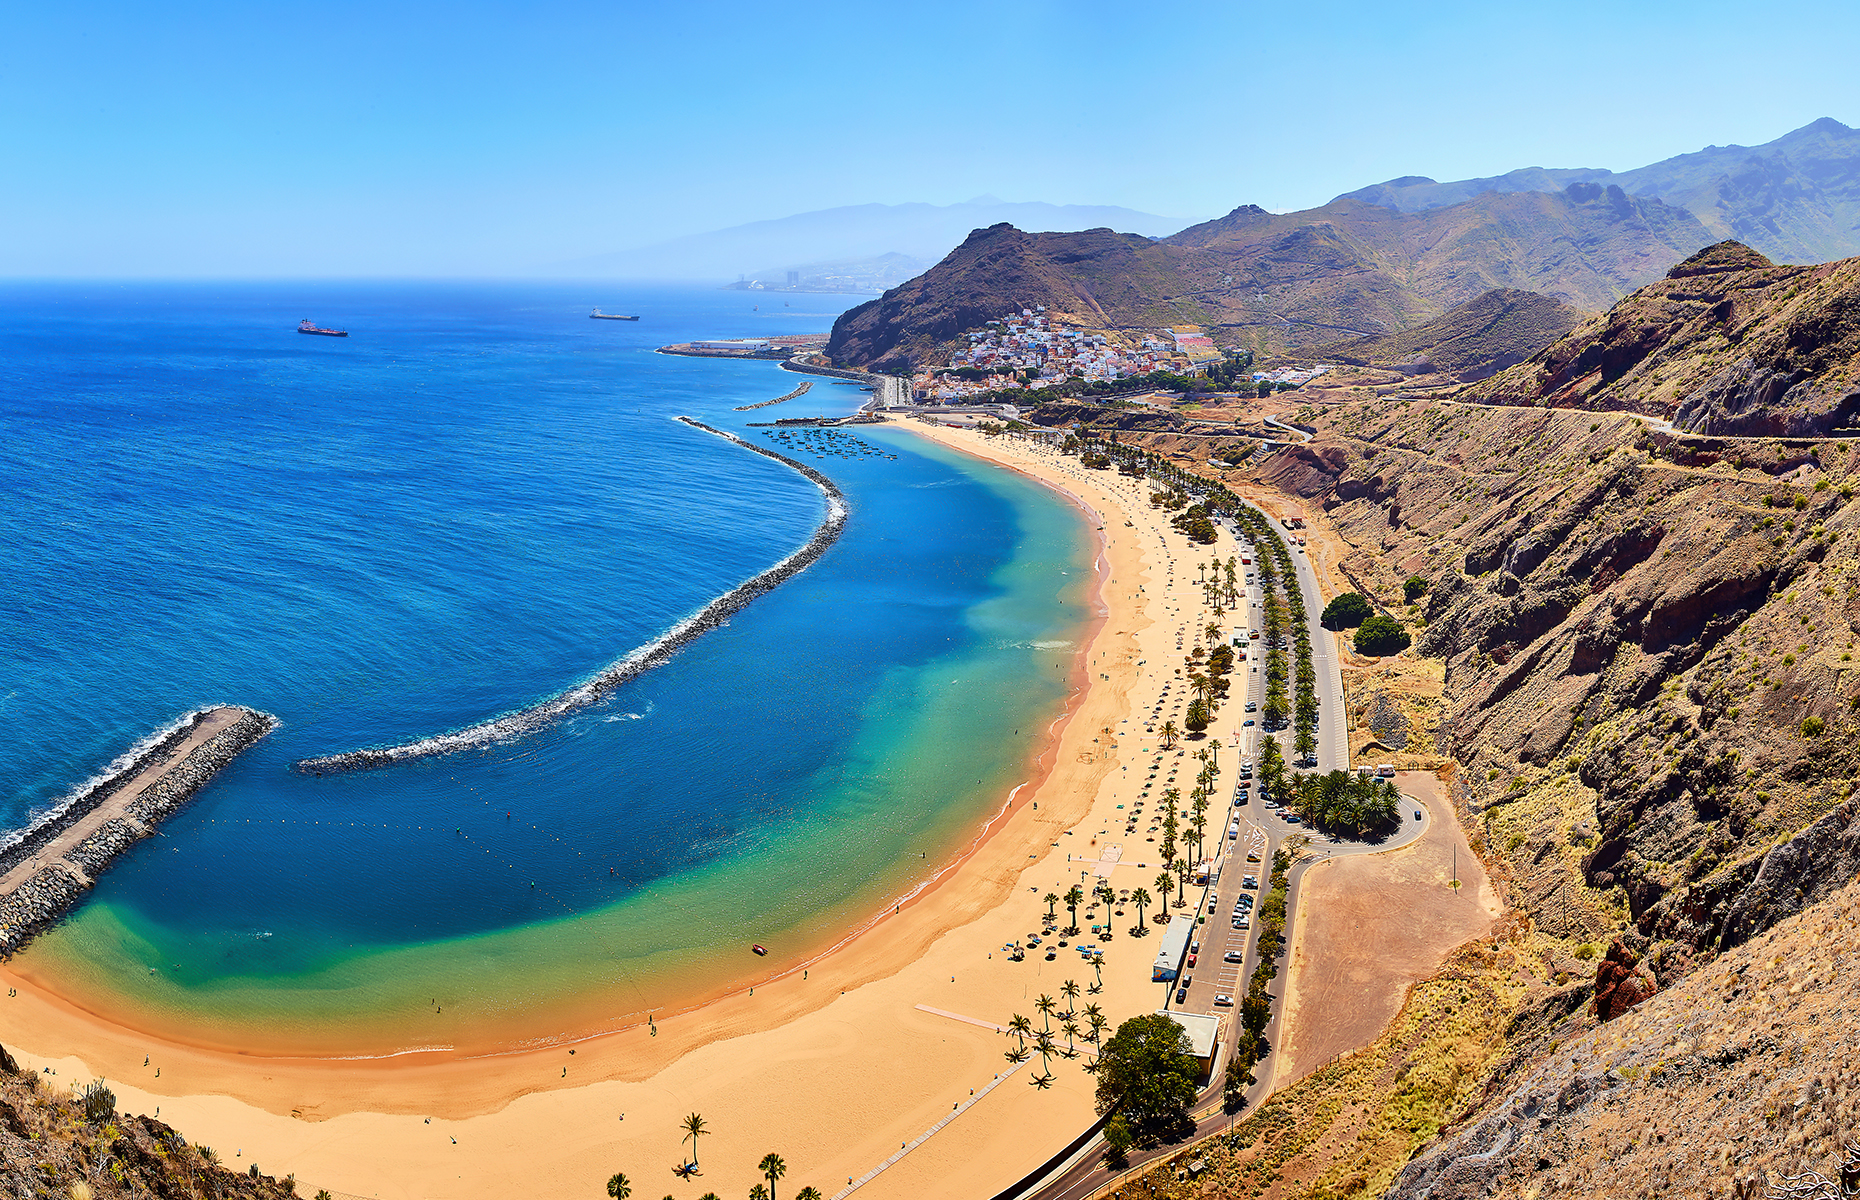 Playa de las Teresitas, Santa Cruz, Tenerife. (Image: BONDART PHOTOGRAPHY/Shutterstock)